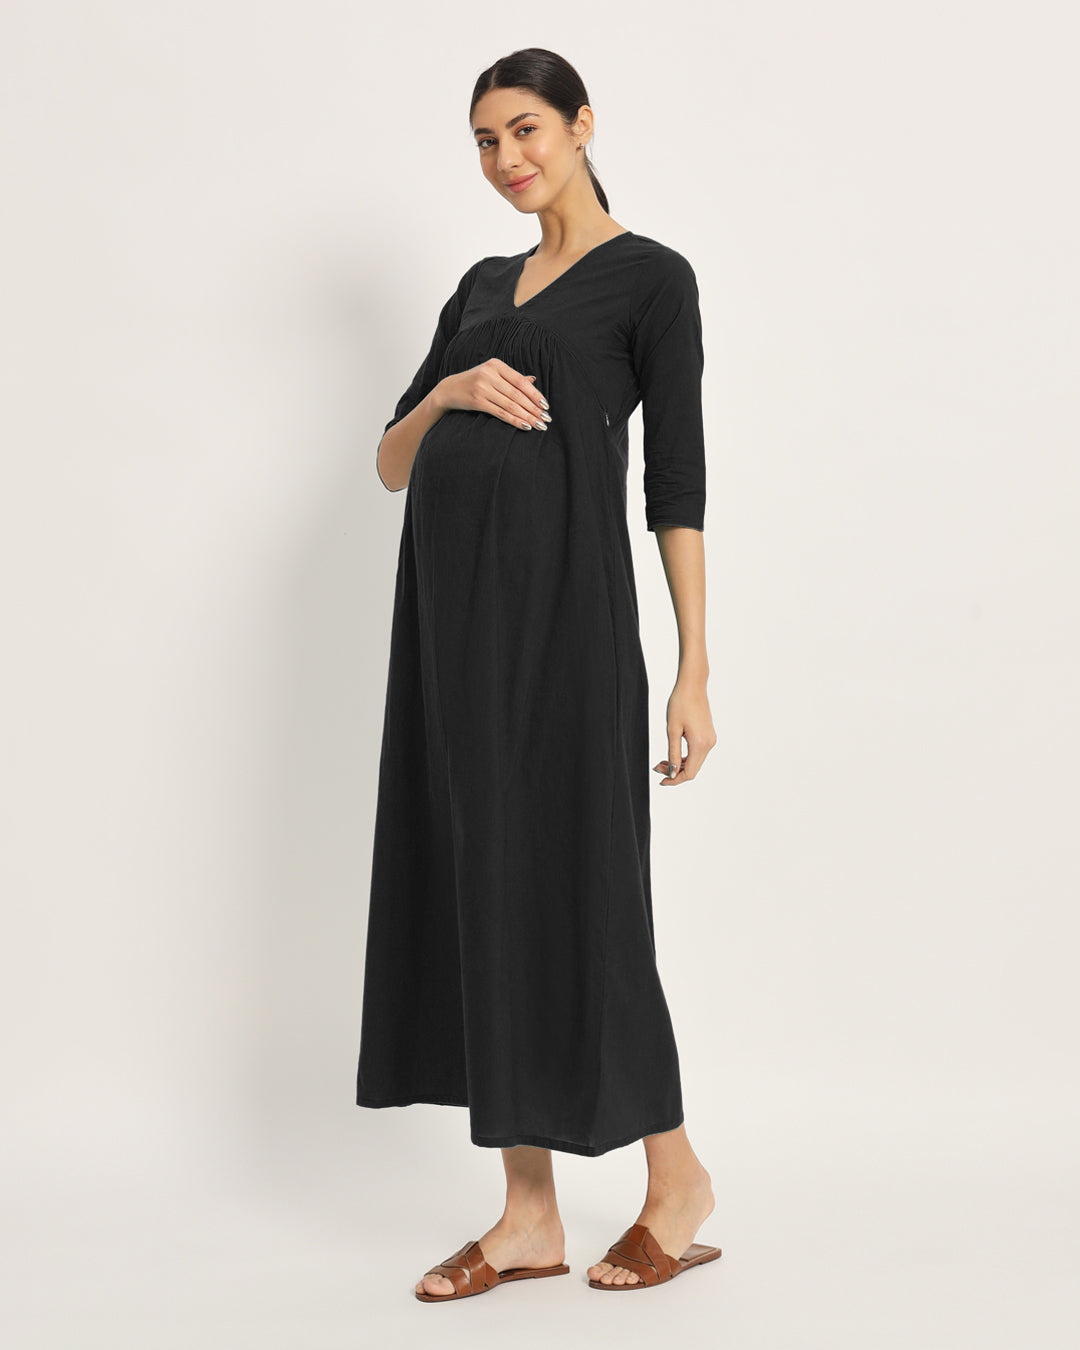 Combo: Black & Sage Green Bump Comfort Maternity & Nursing Dress - Set of 2